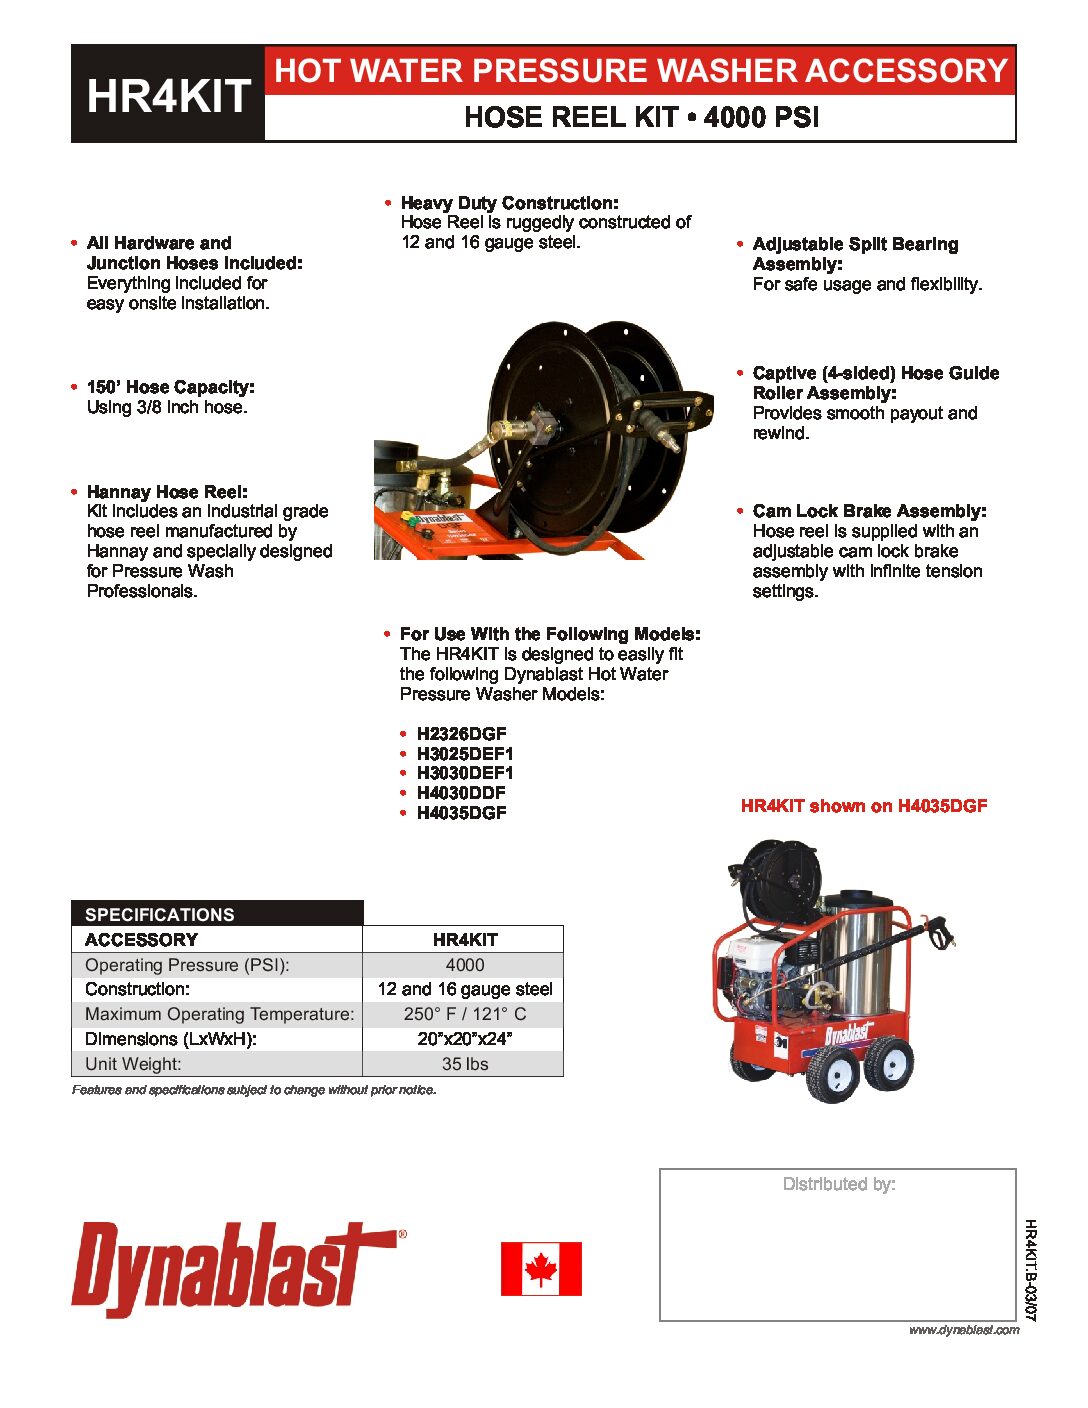 Cascade Thinline4port Hydraulic Hose Reel Parts, PDF, Manufactured Goods